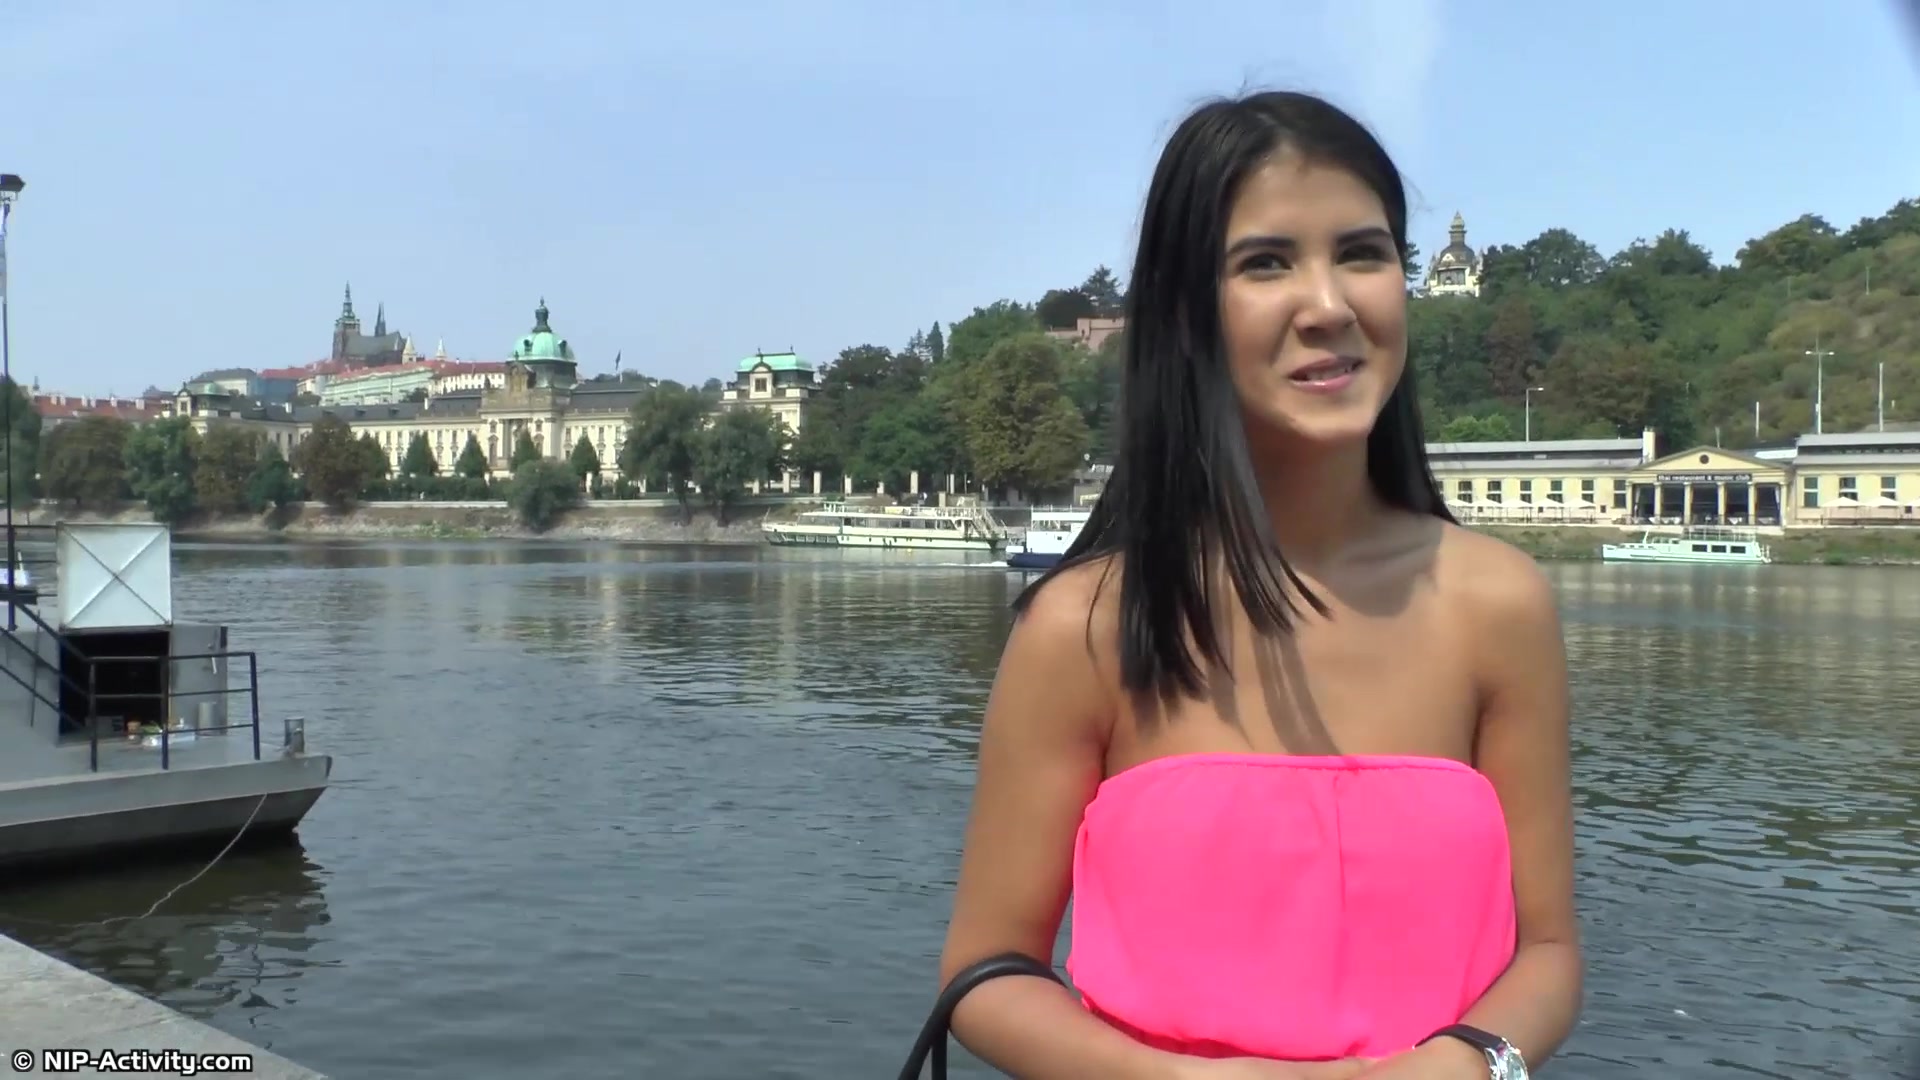 Drahomira nude in public in Prague